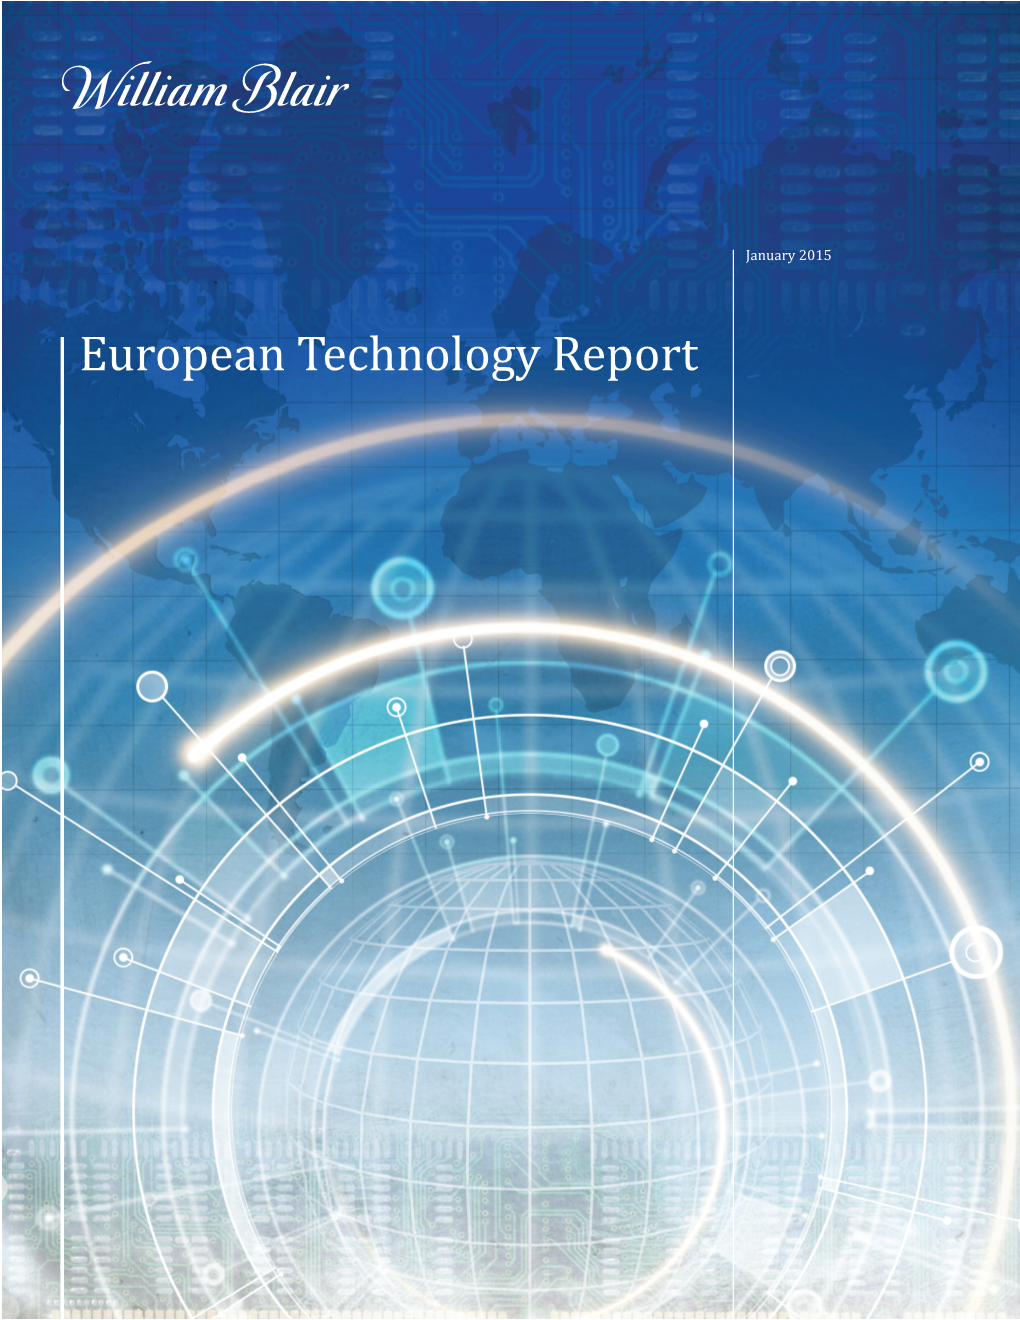 European Technology Report January 2015